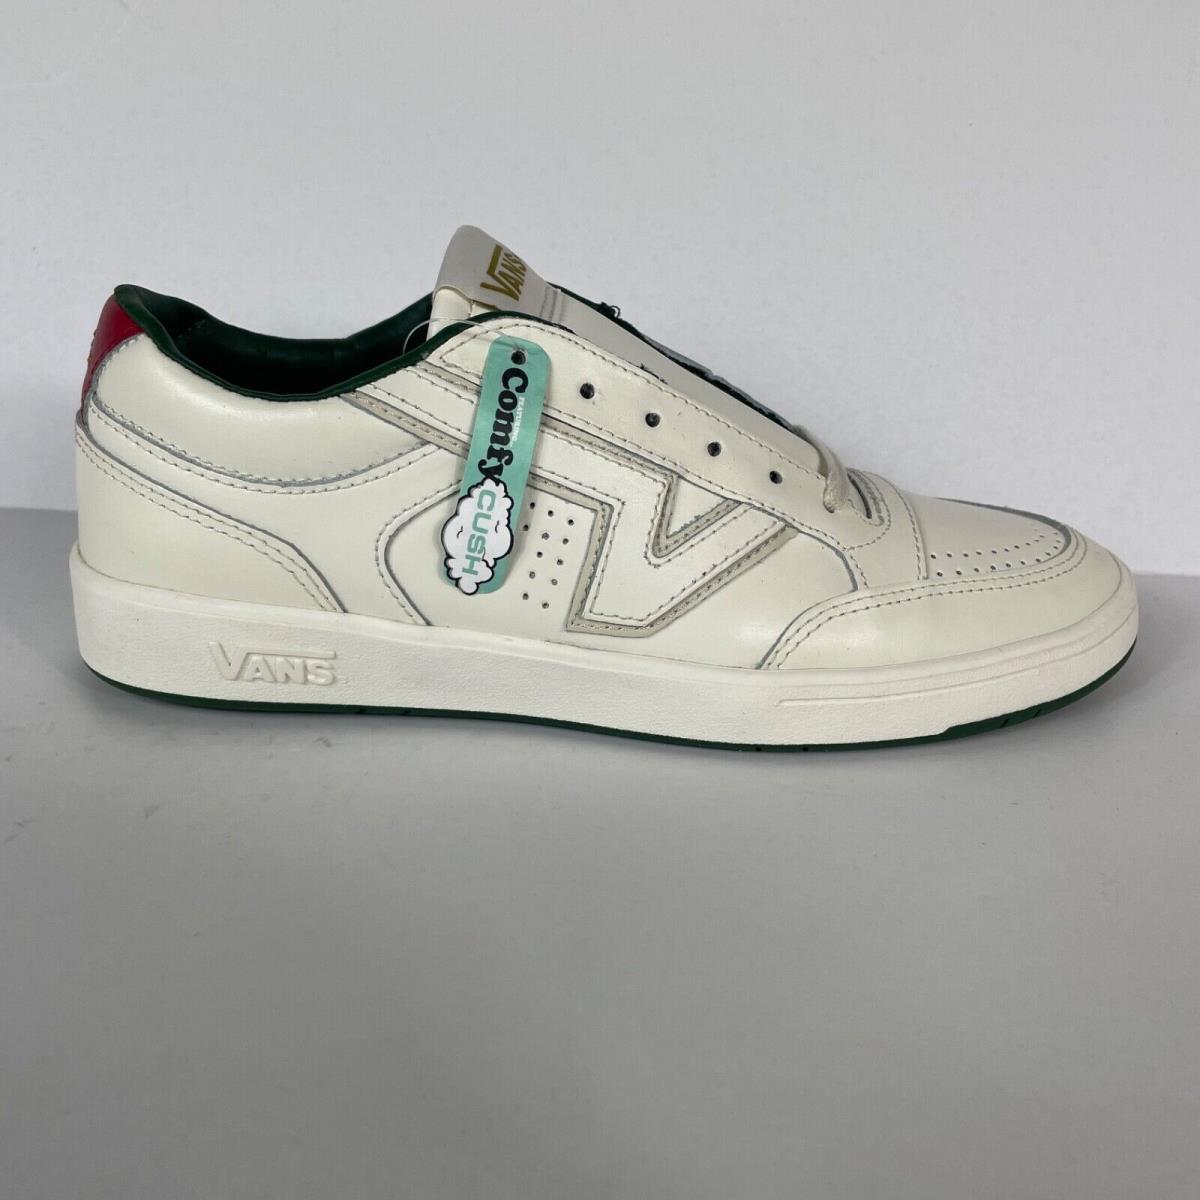 Vans Shoes Mens 8 Lowland CC Premium Marshmallow Green Bottom Skating Sneakers